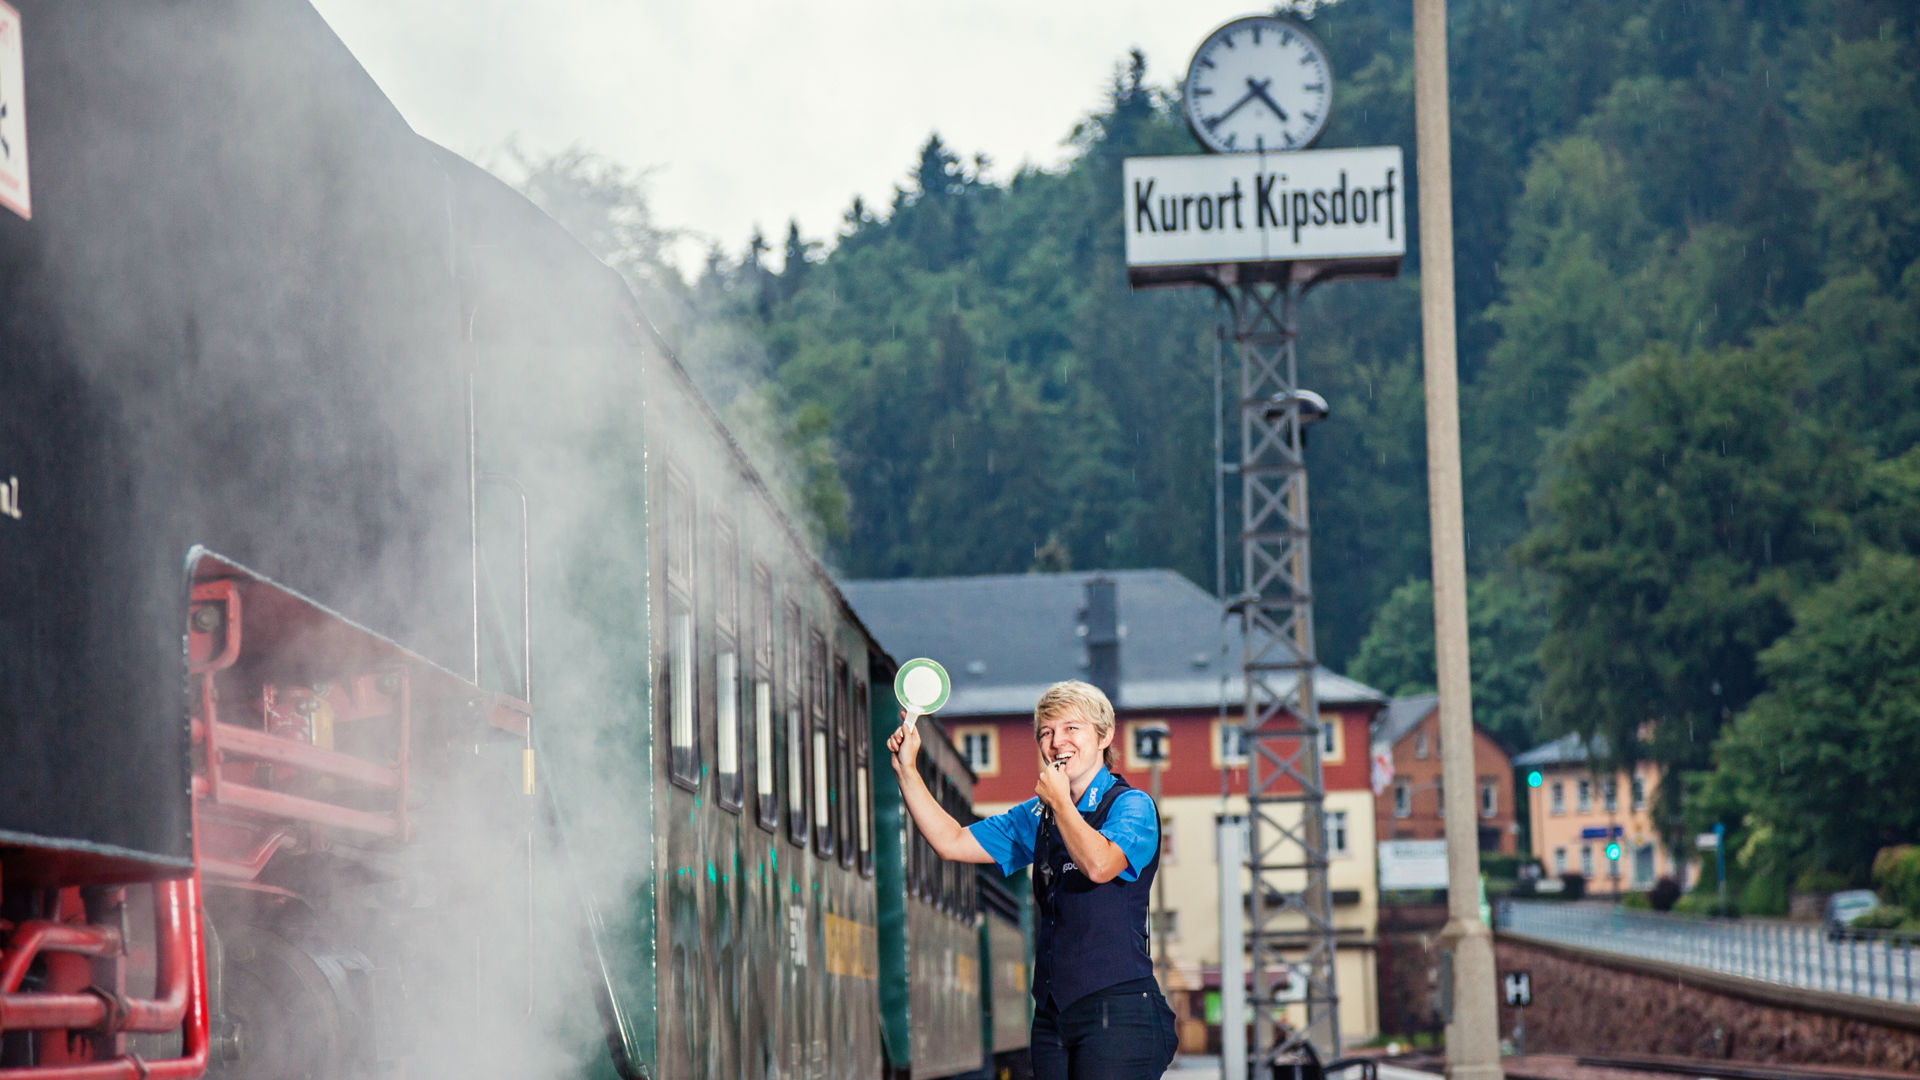 Bahnhof Kipsdorf 
© PROFESSIONAL PHOTOGRAPHY LARSNEUMANN